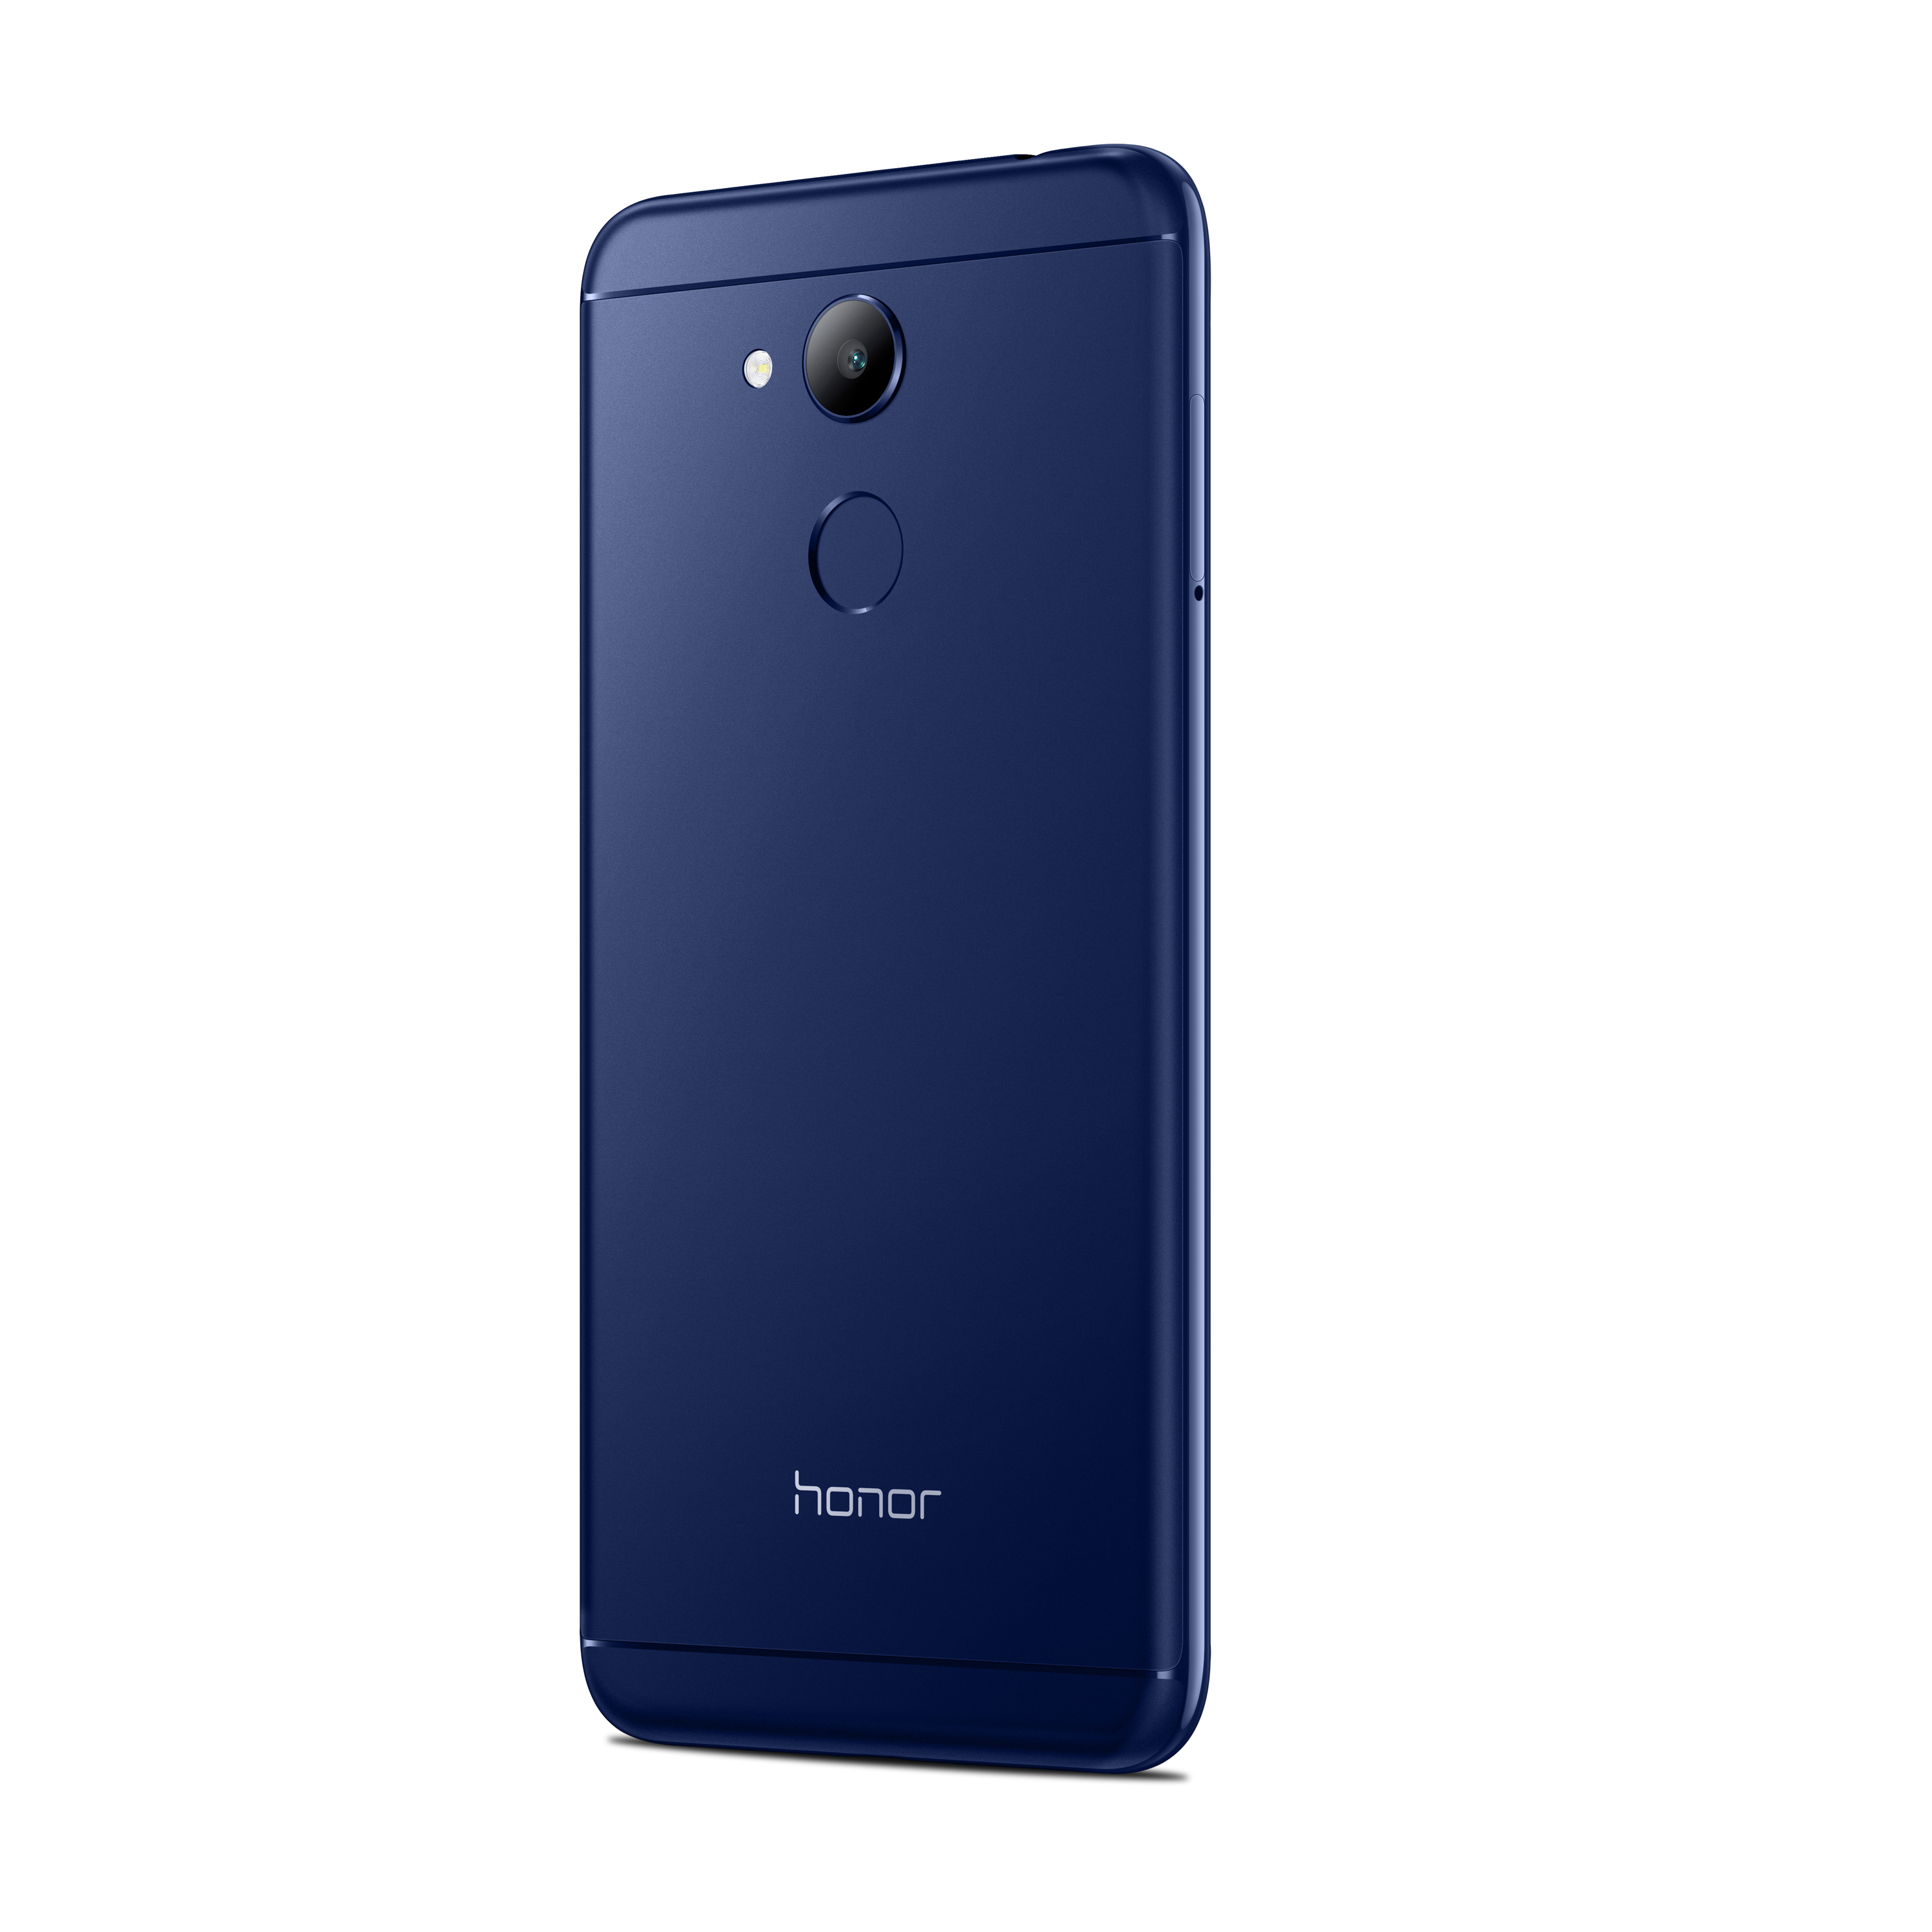 Honor 6 2. Huawei Honor 6c Pro. Huawei Honor 6c. Смартфон Honor 6c Pro. Huawei Honor 6c Pro JMM-l22.